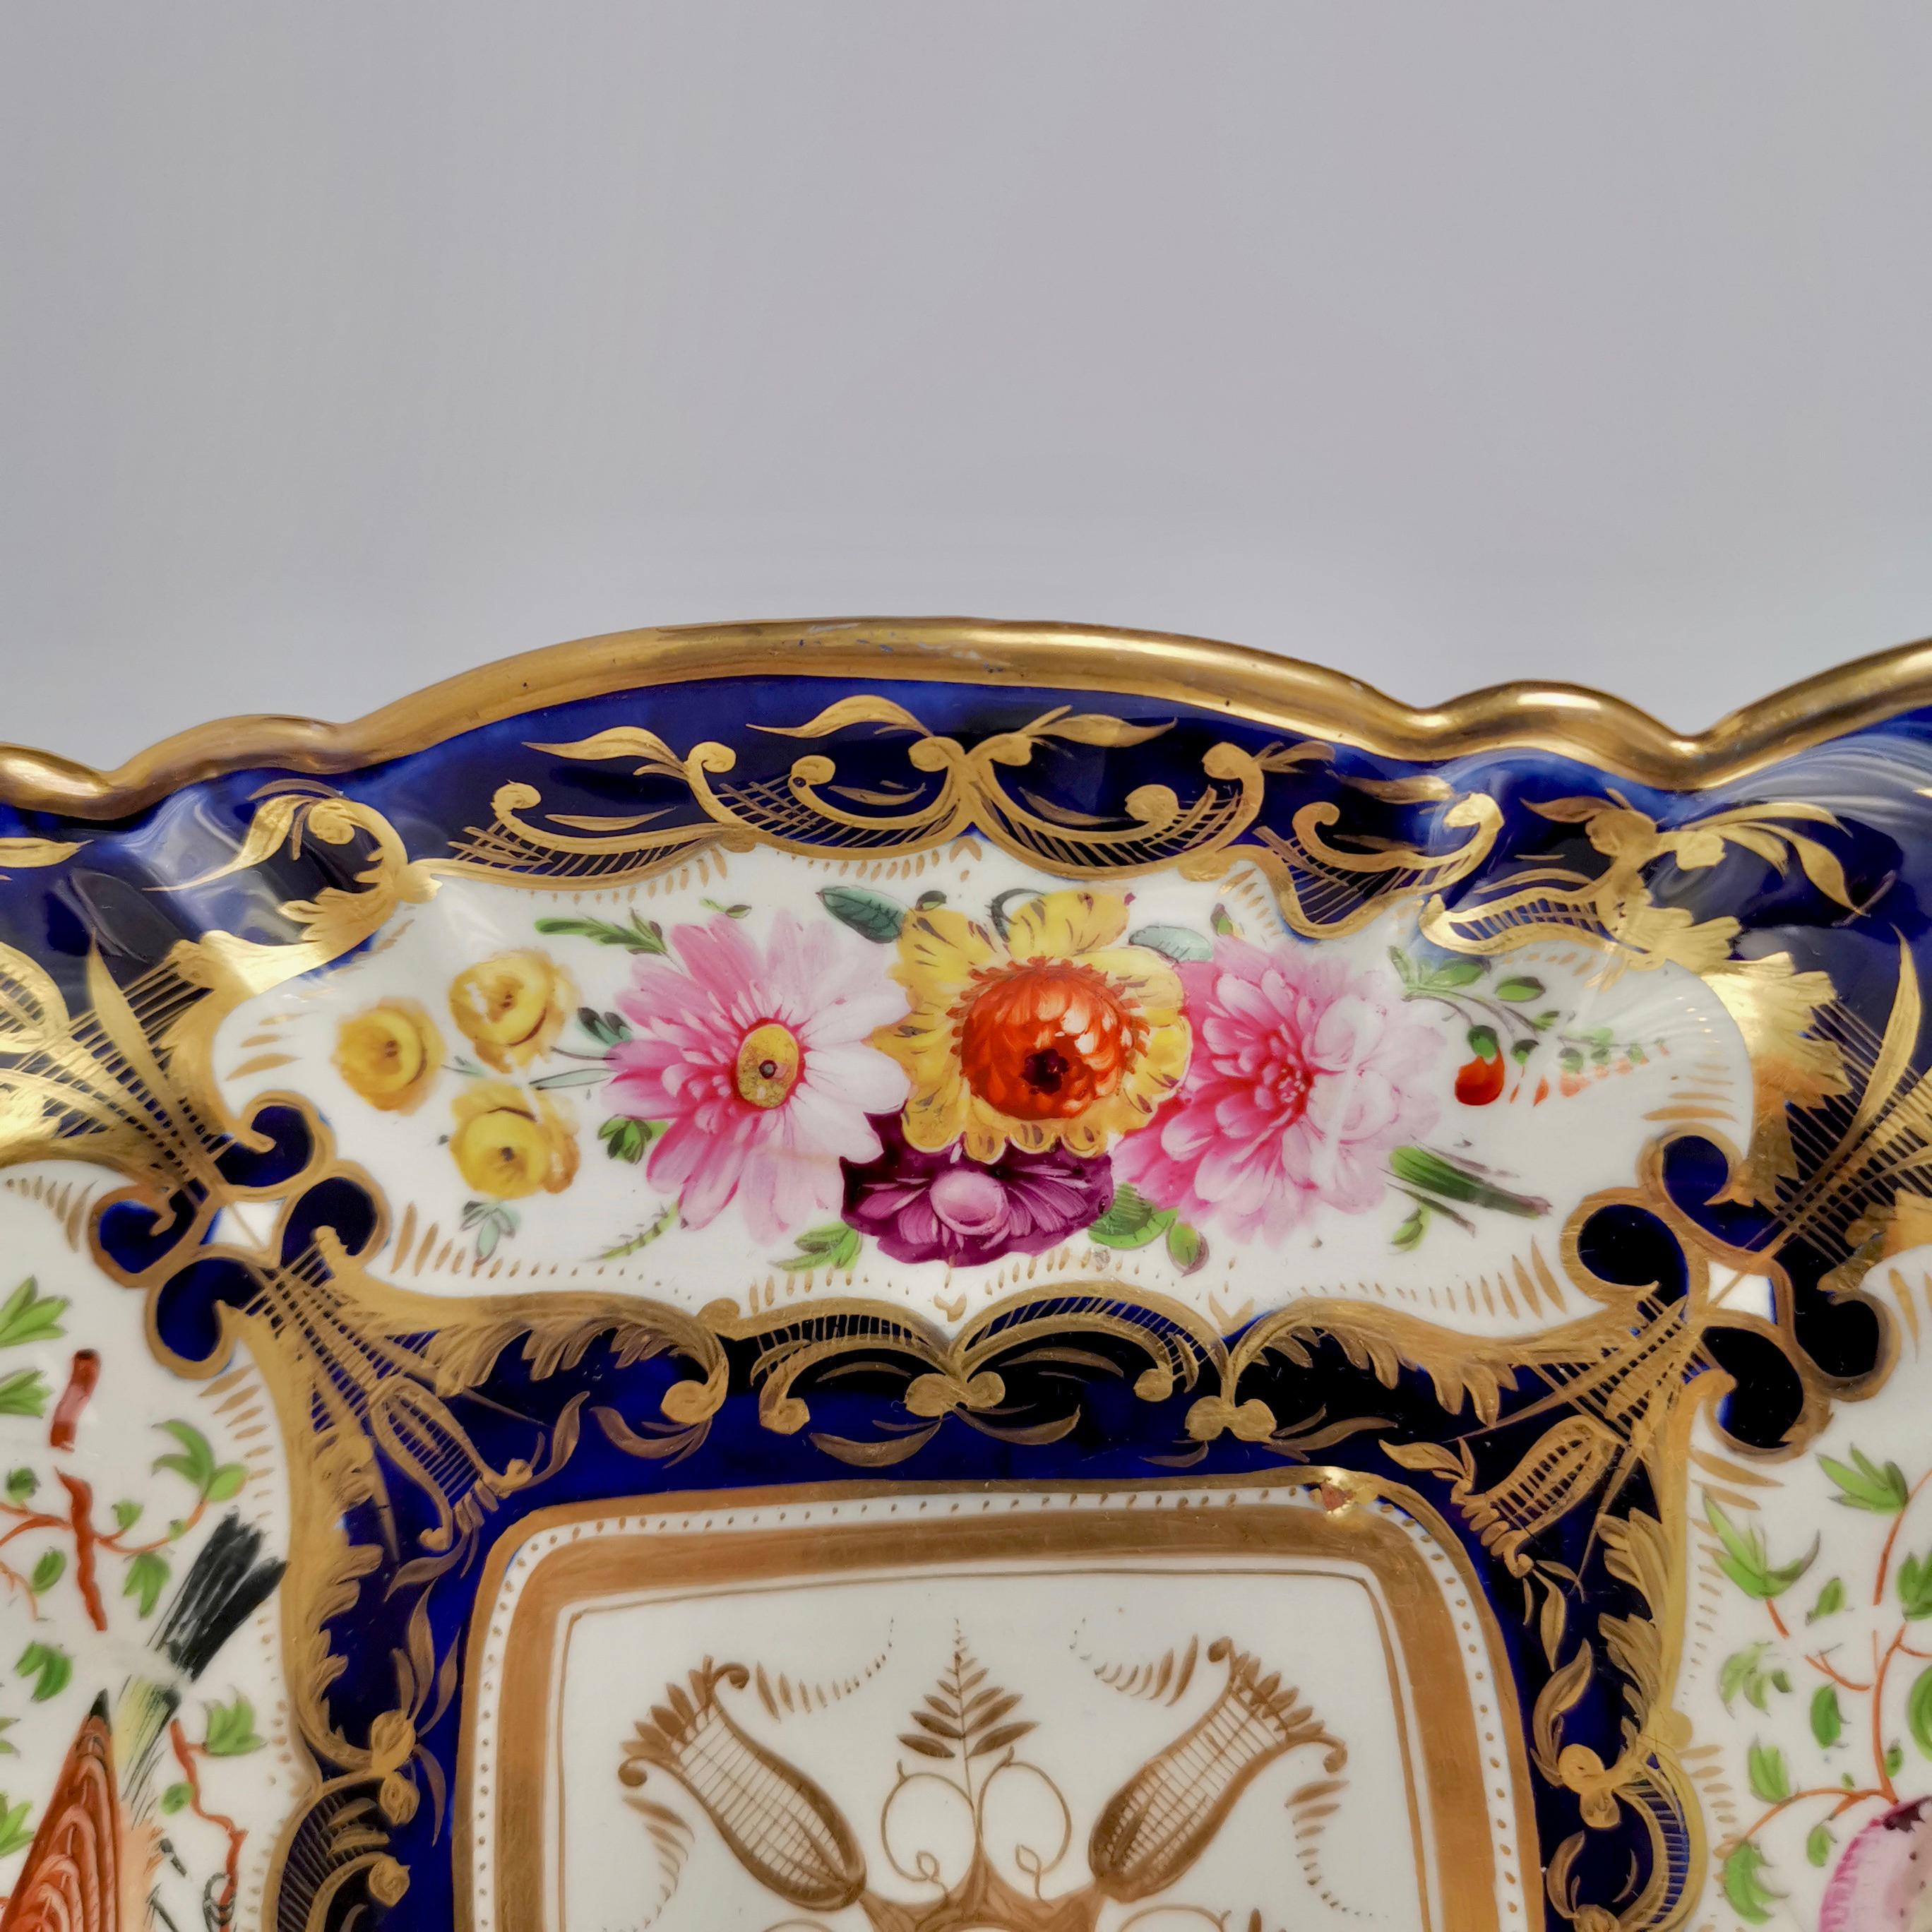 Early 19th Century Coalport Square Porcelain Dish, Patt. 759 Birds and Flowers, Regency, circa 1815